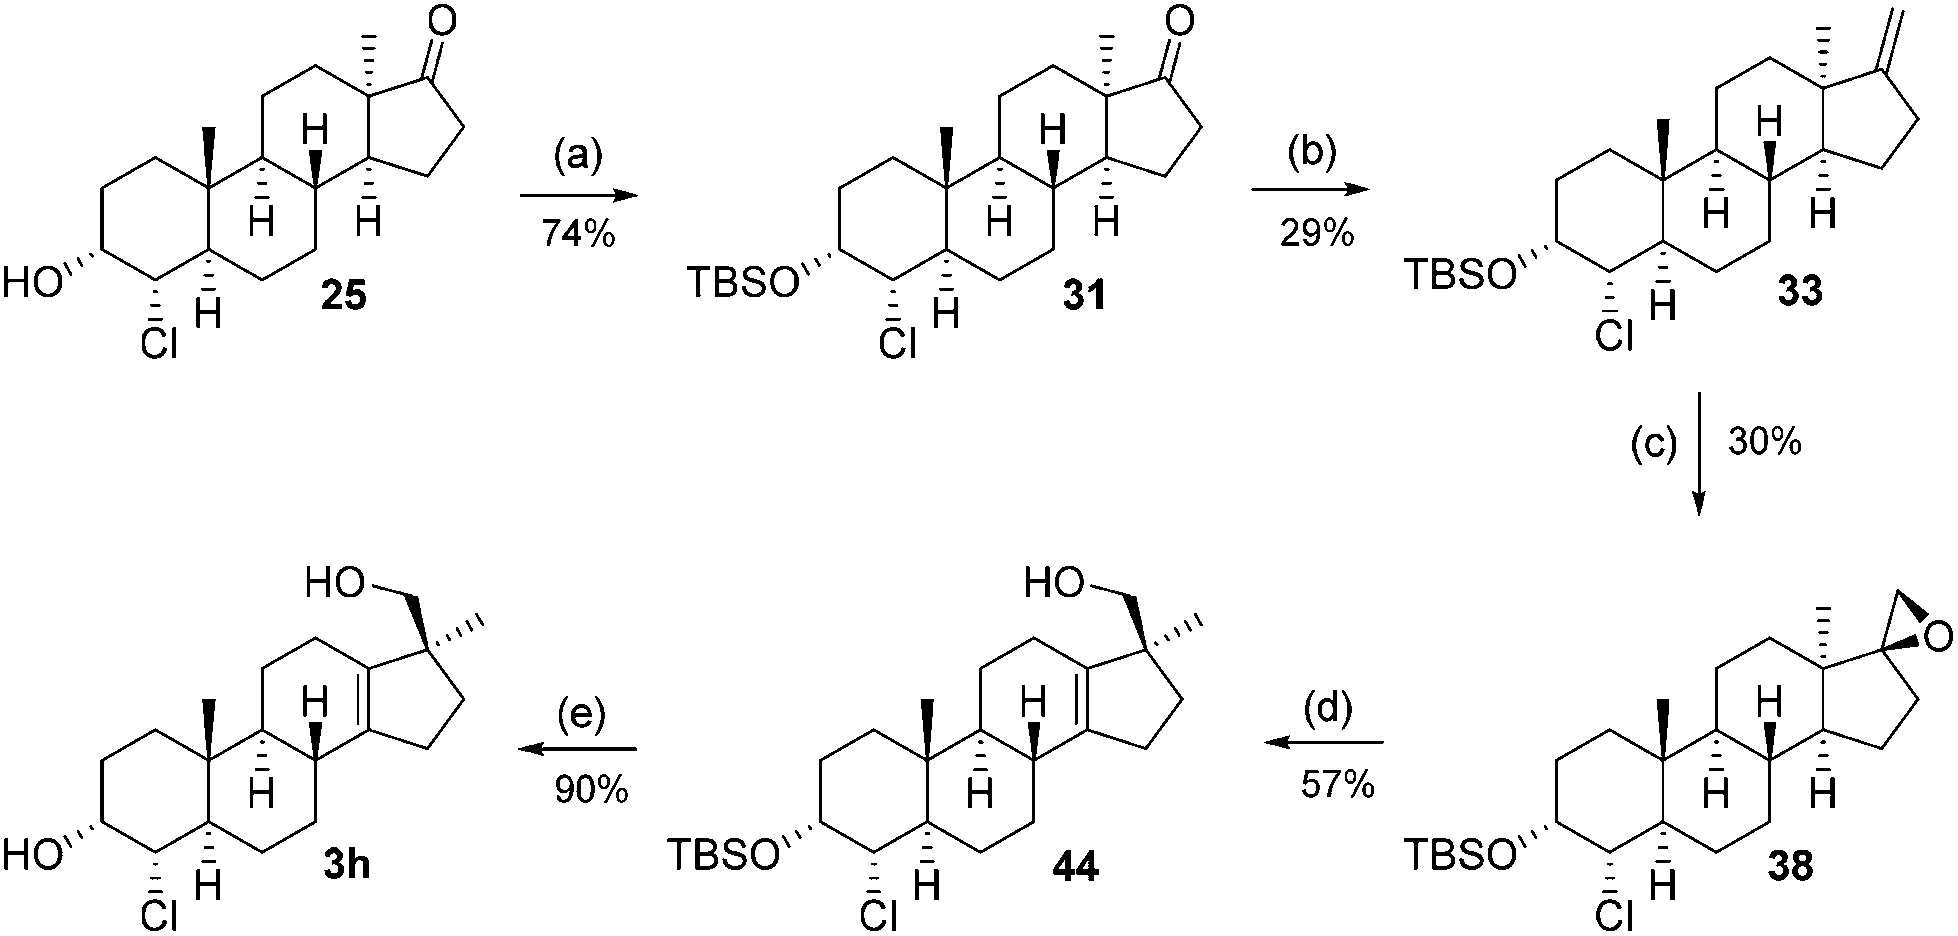 dichloromethane non reactivity